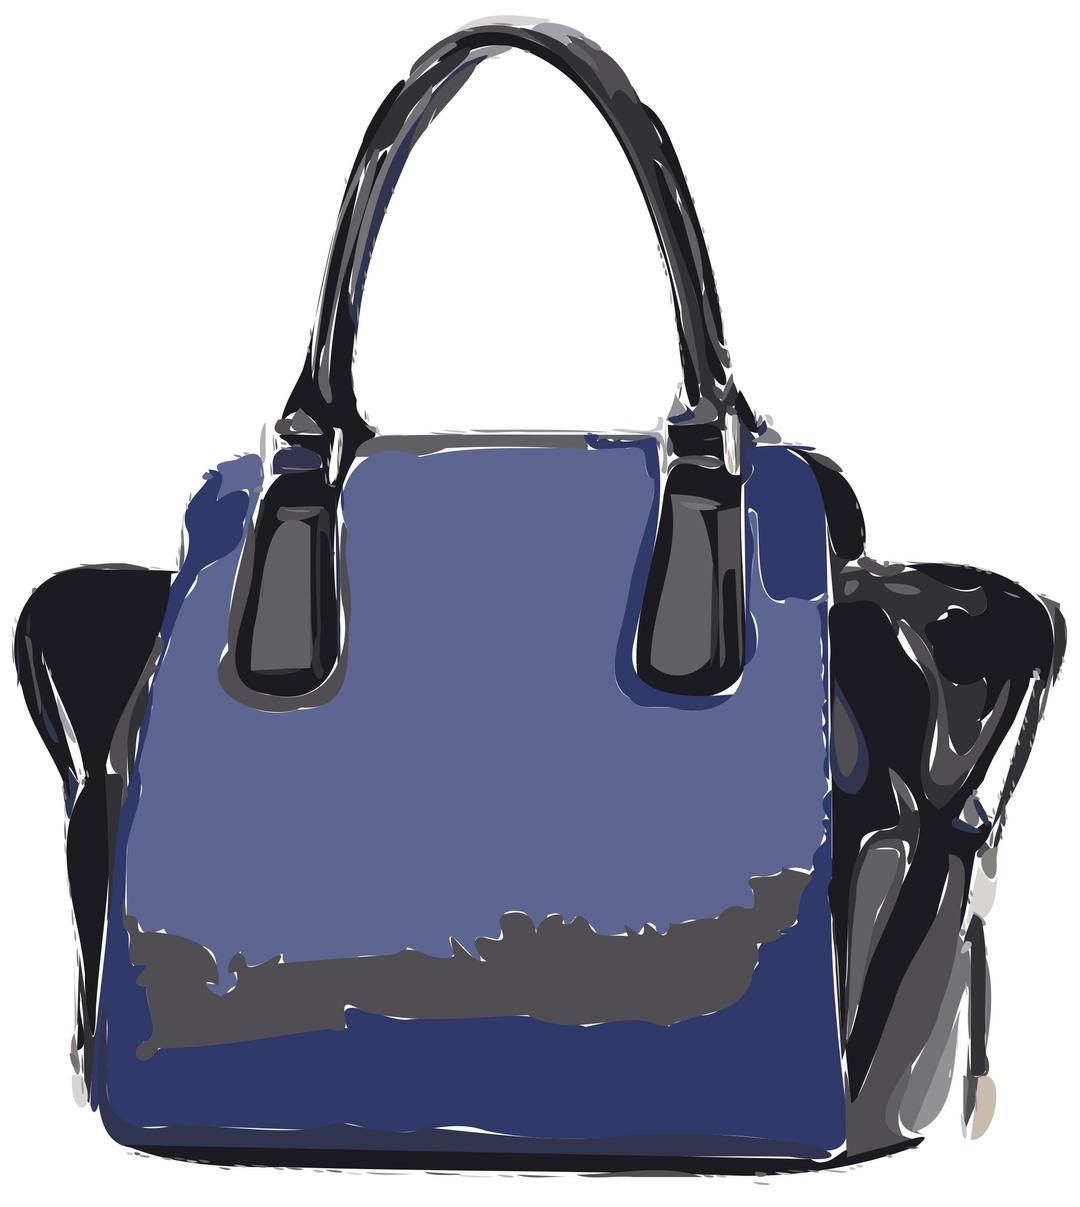 Dark Blue and Black Handbag  png transparent